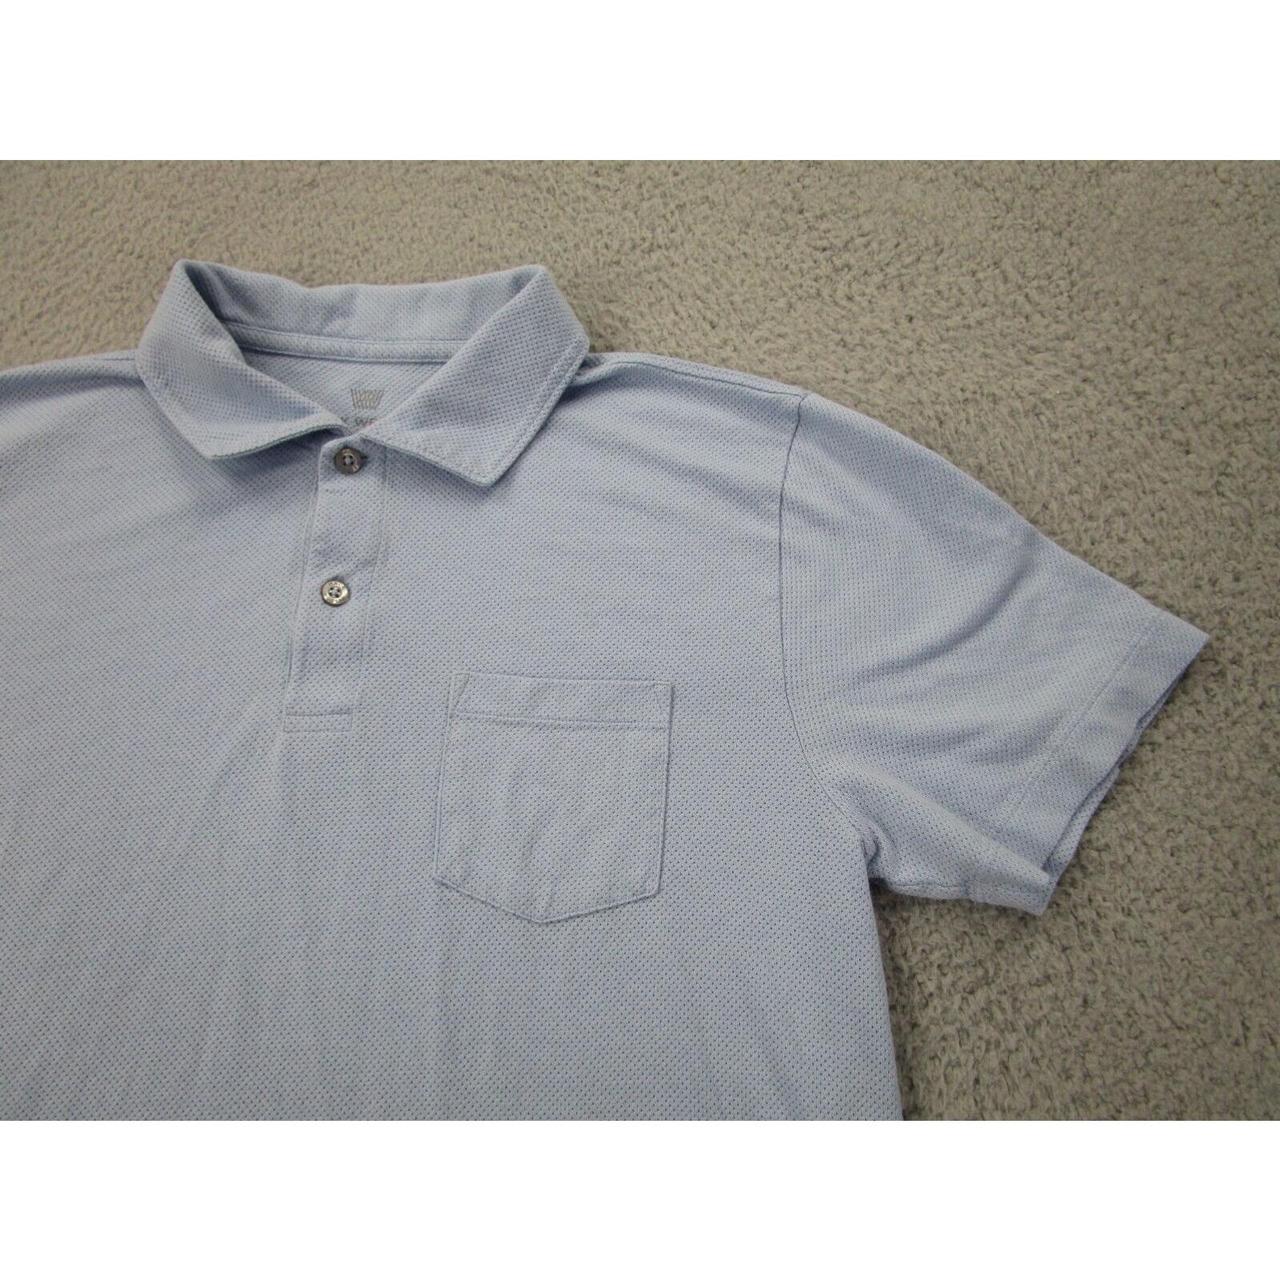 Mack Weldon Men's Blue Polo-shirts (2)